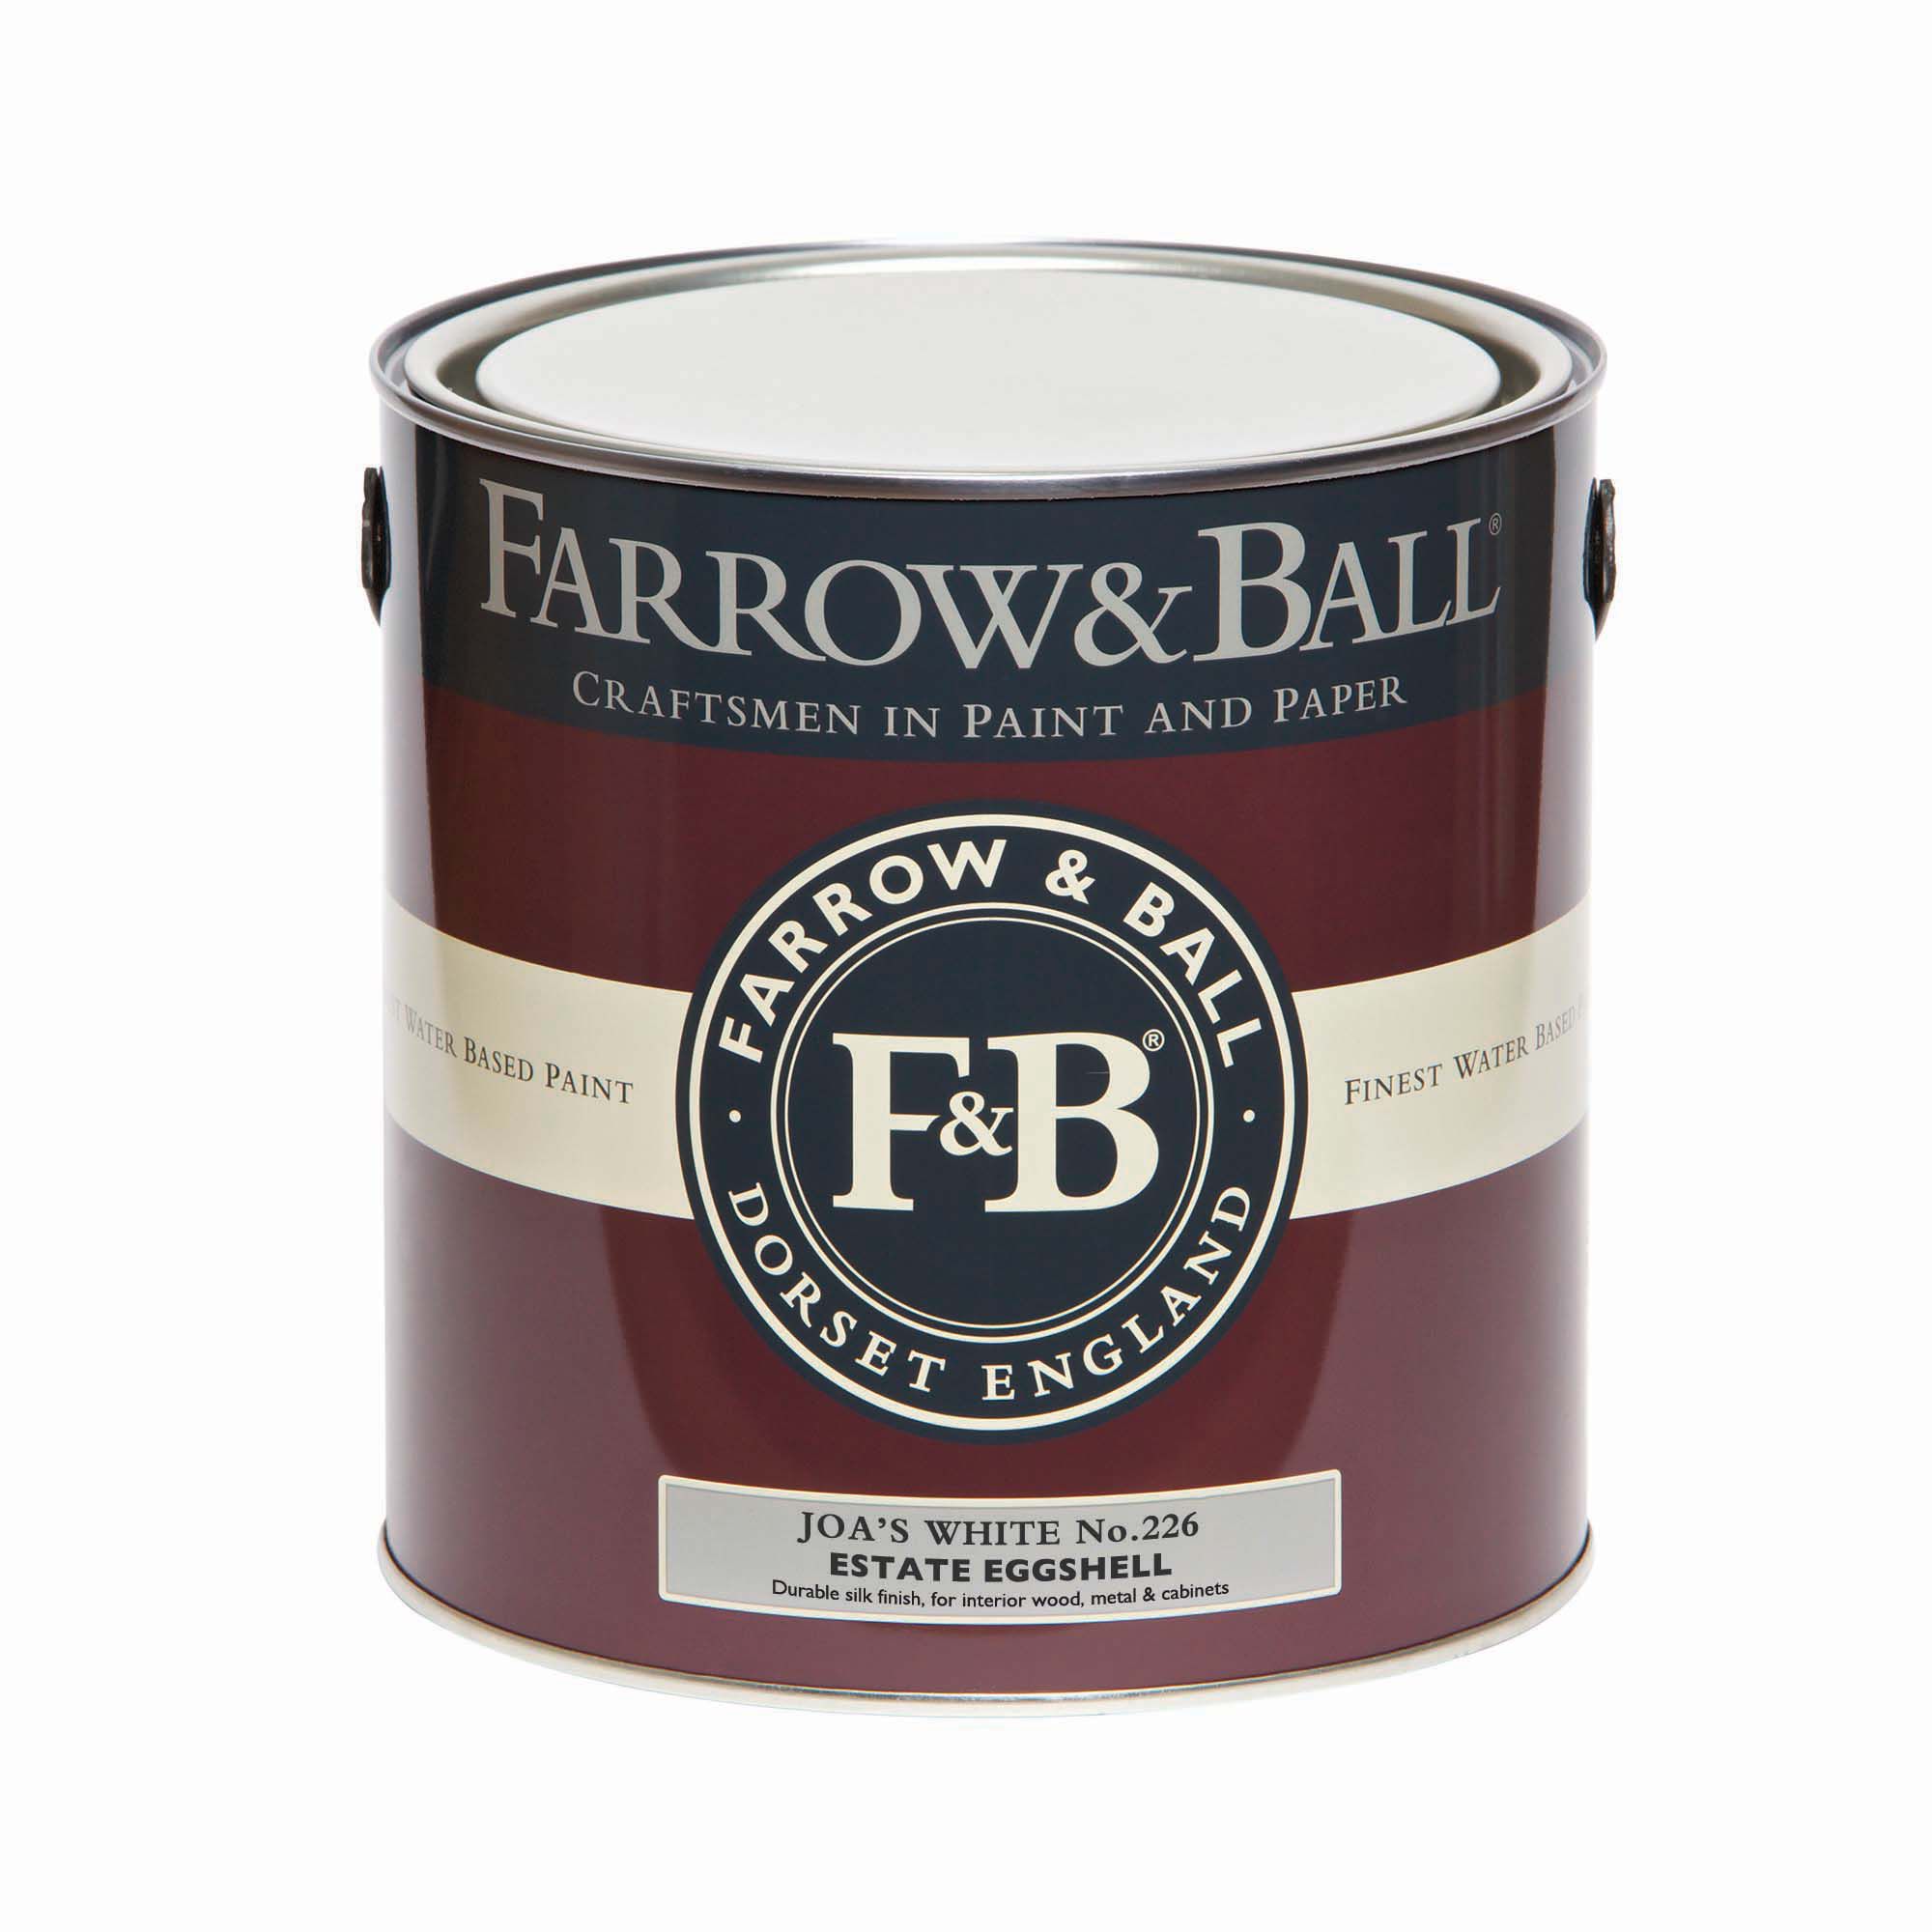 Farrow & Ball Estate Joa's White No.226 Eggshell Paint, 2.5L